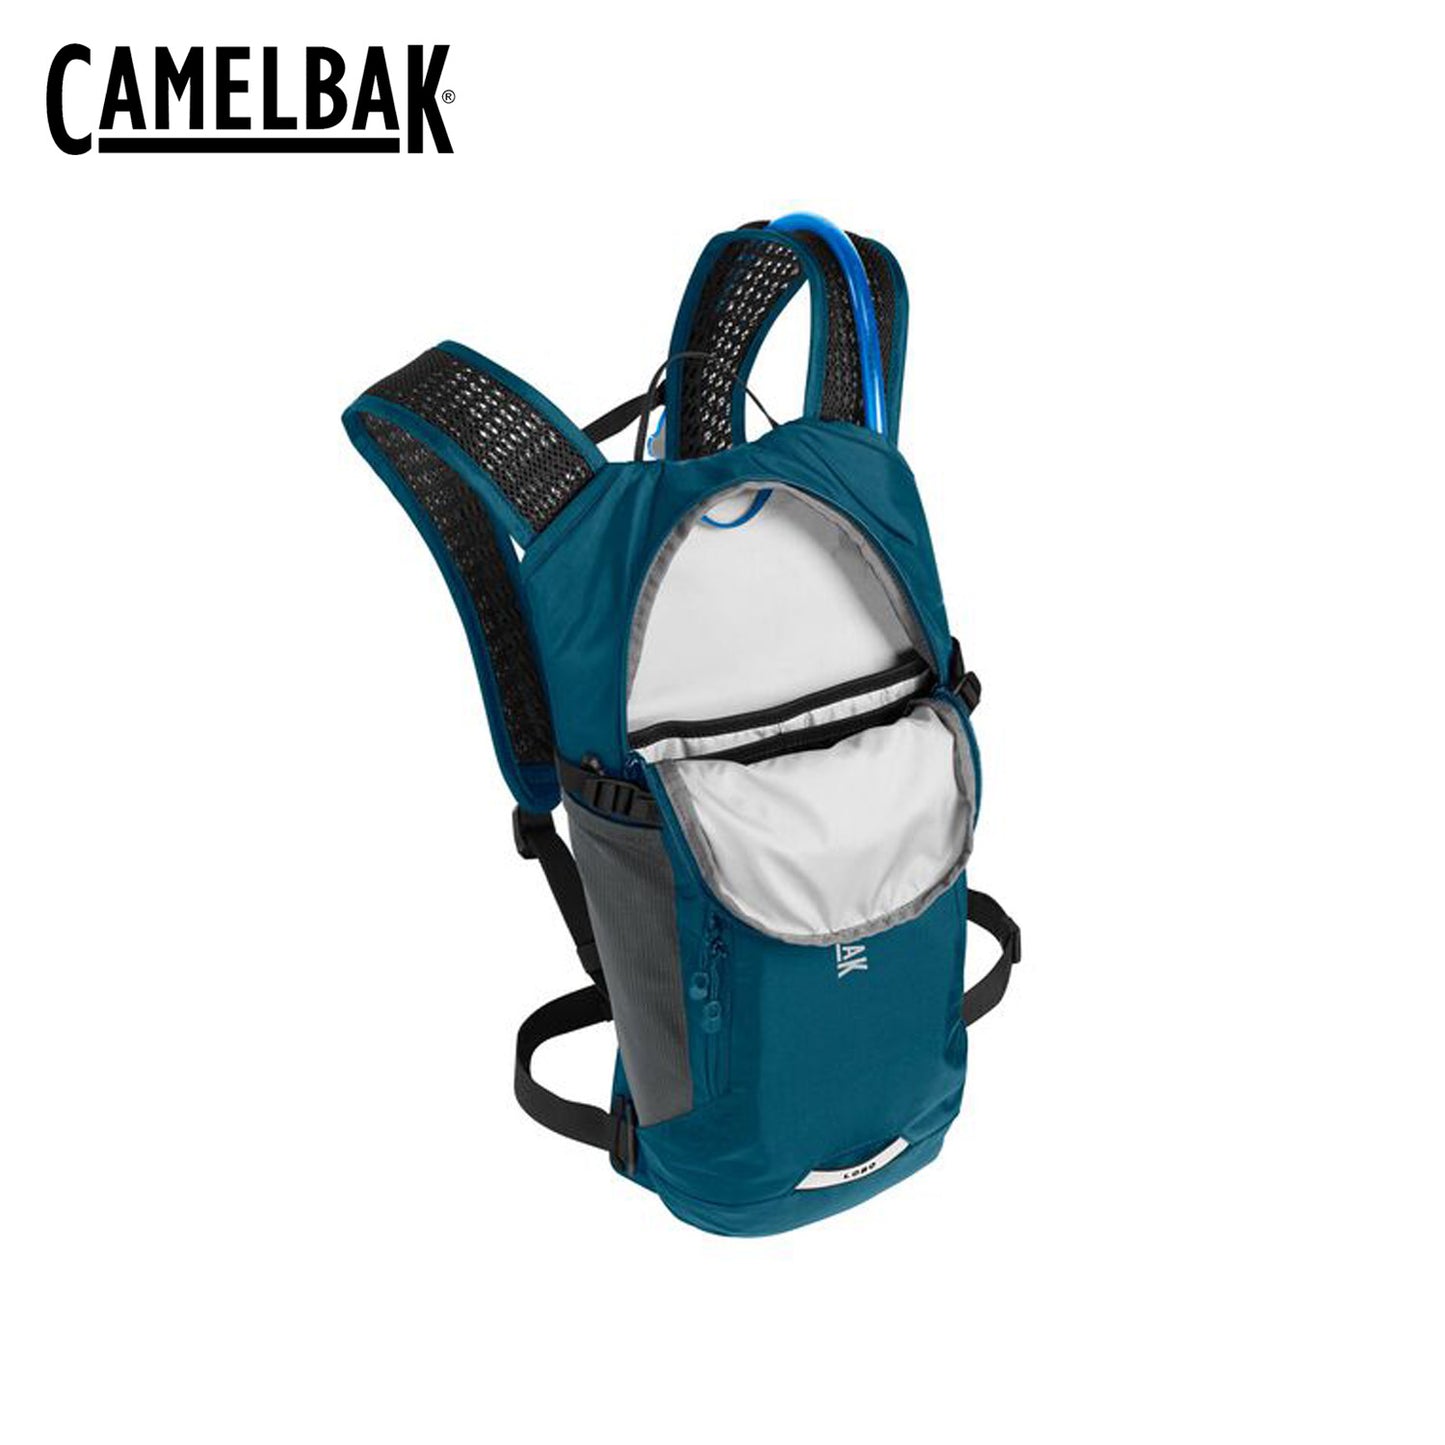 CamelBak Lobo 9 70oz Hydration Pack - Moroccan Blue/Black